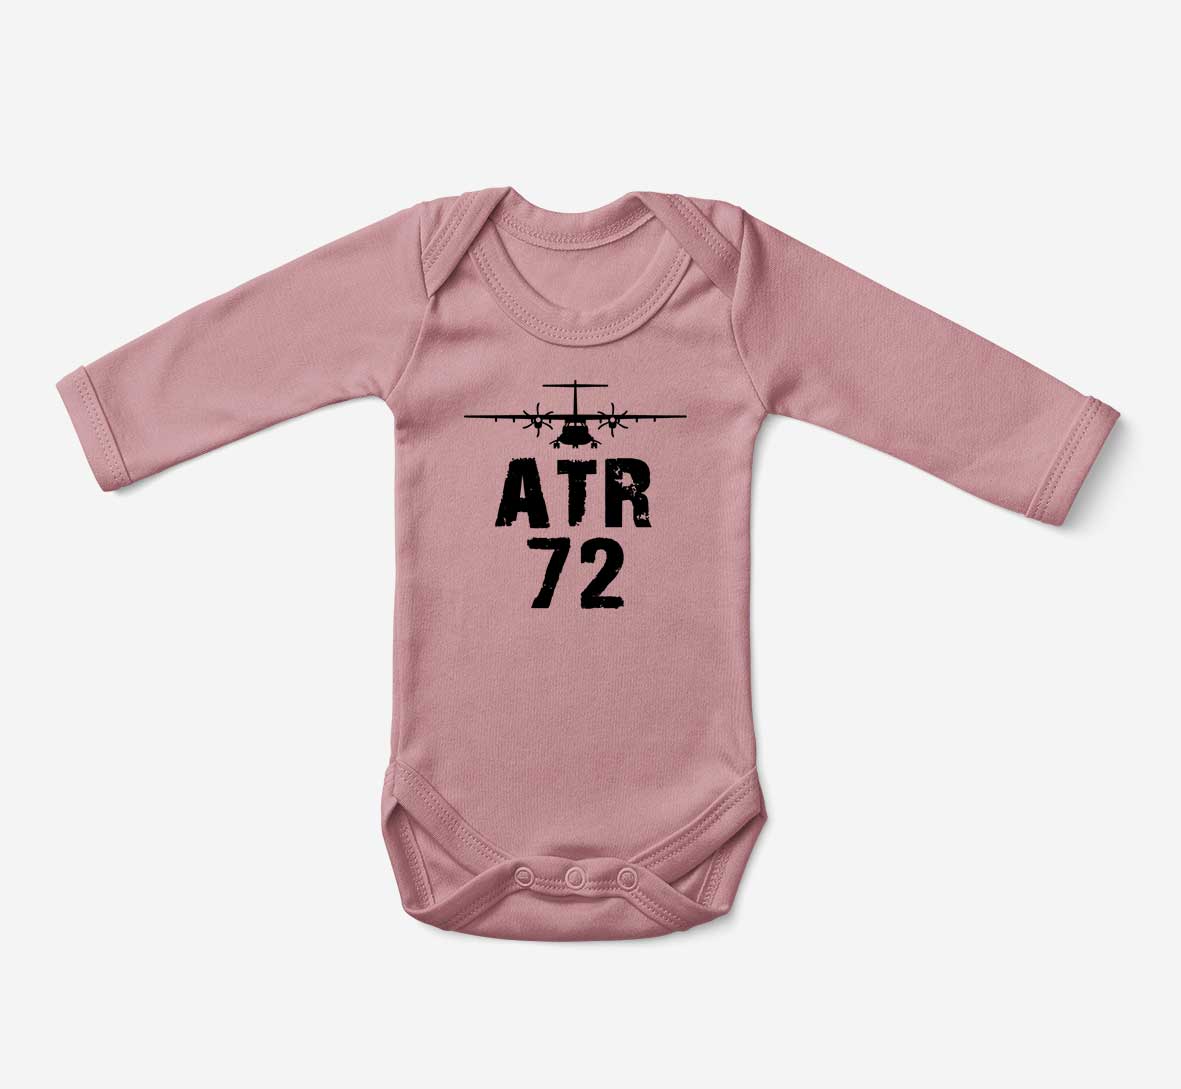 ATR-72 & Plane Designed Baby Bodysuits